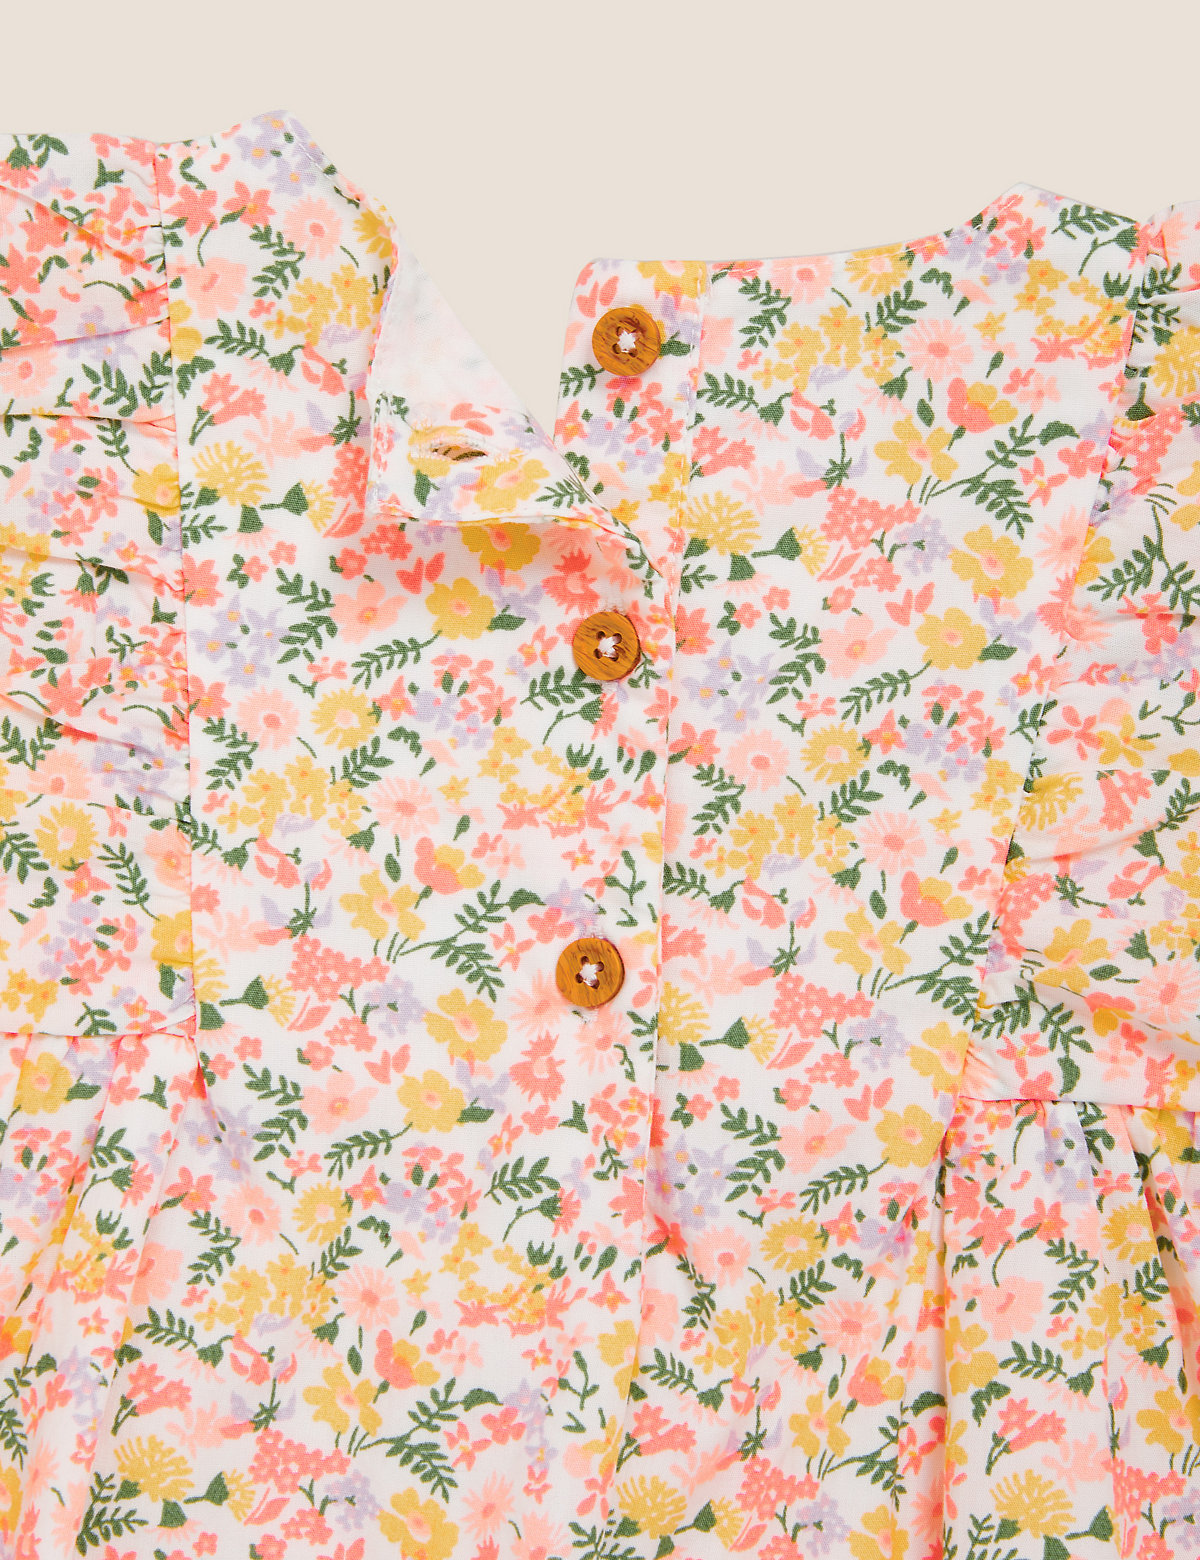 Pure Cotton Floral Dress (0-3 Yrs)